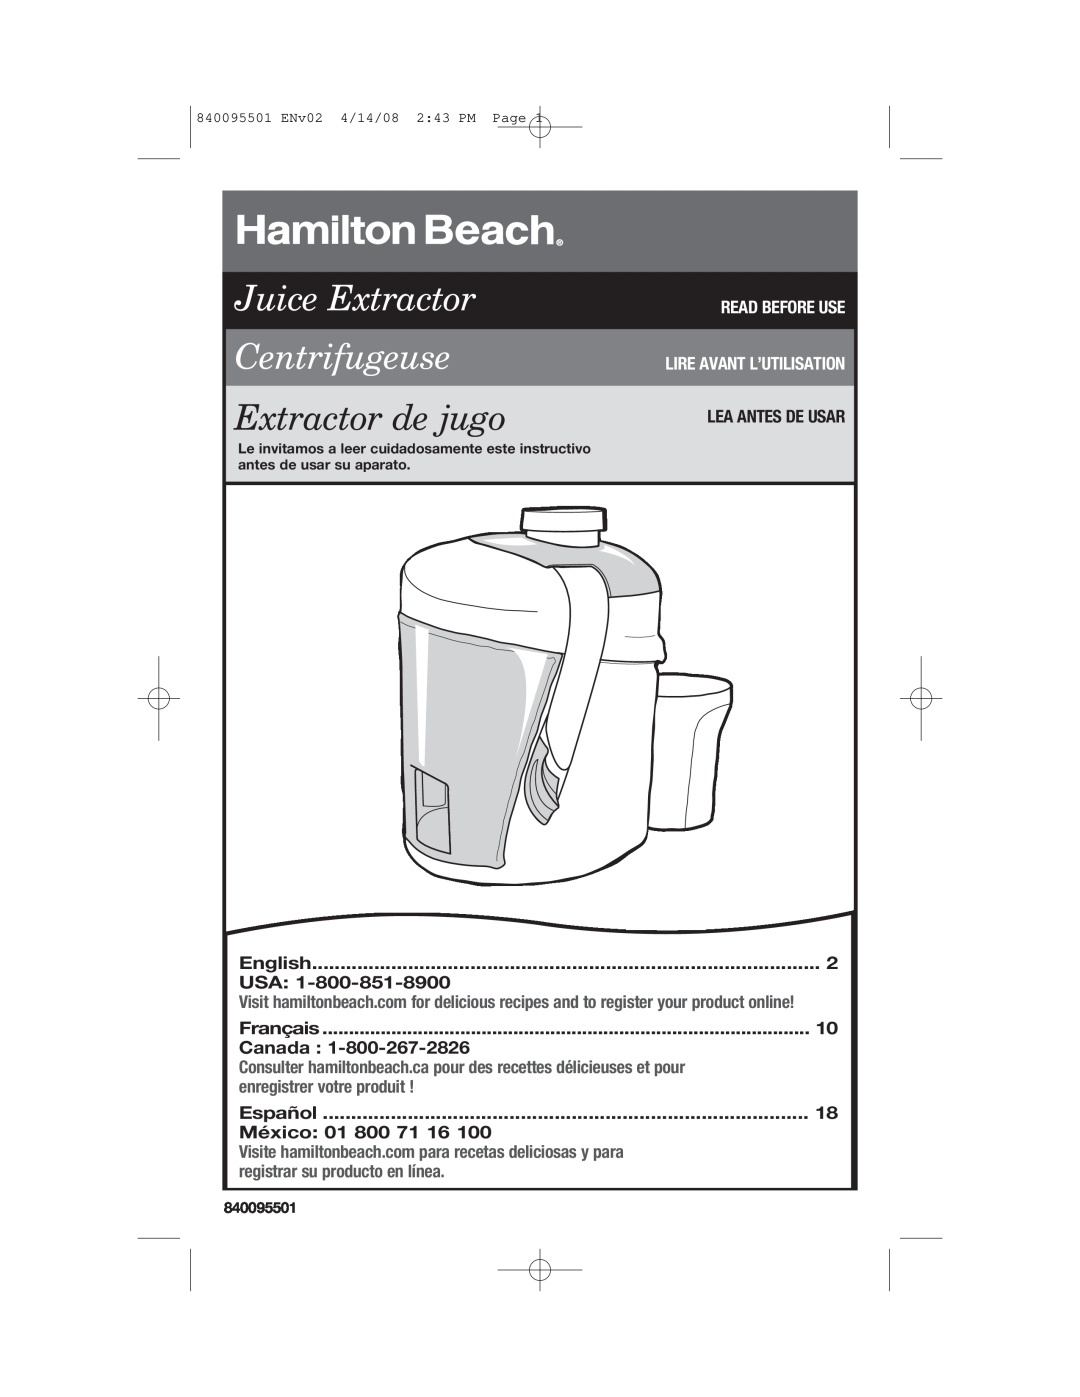 Hamilton Beach 840095501 user manual And Instructions, Download Here, Similar manuals 